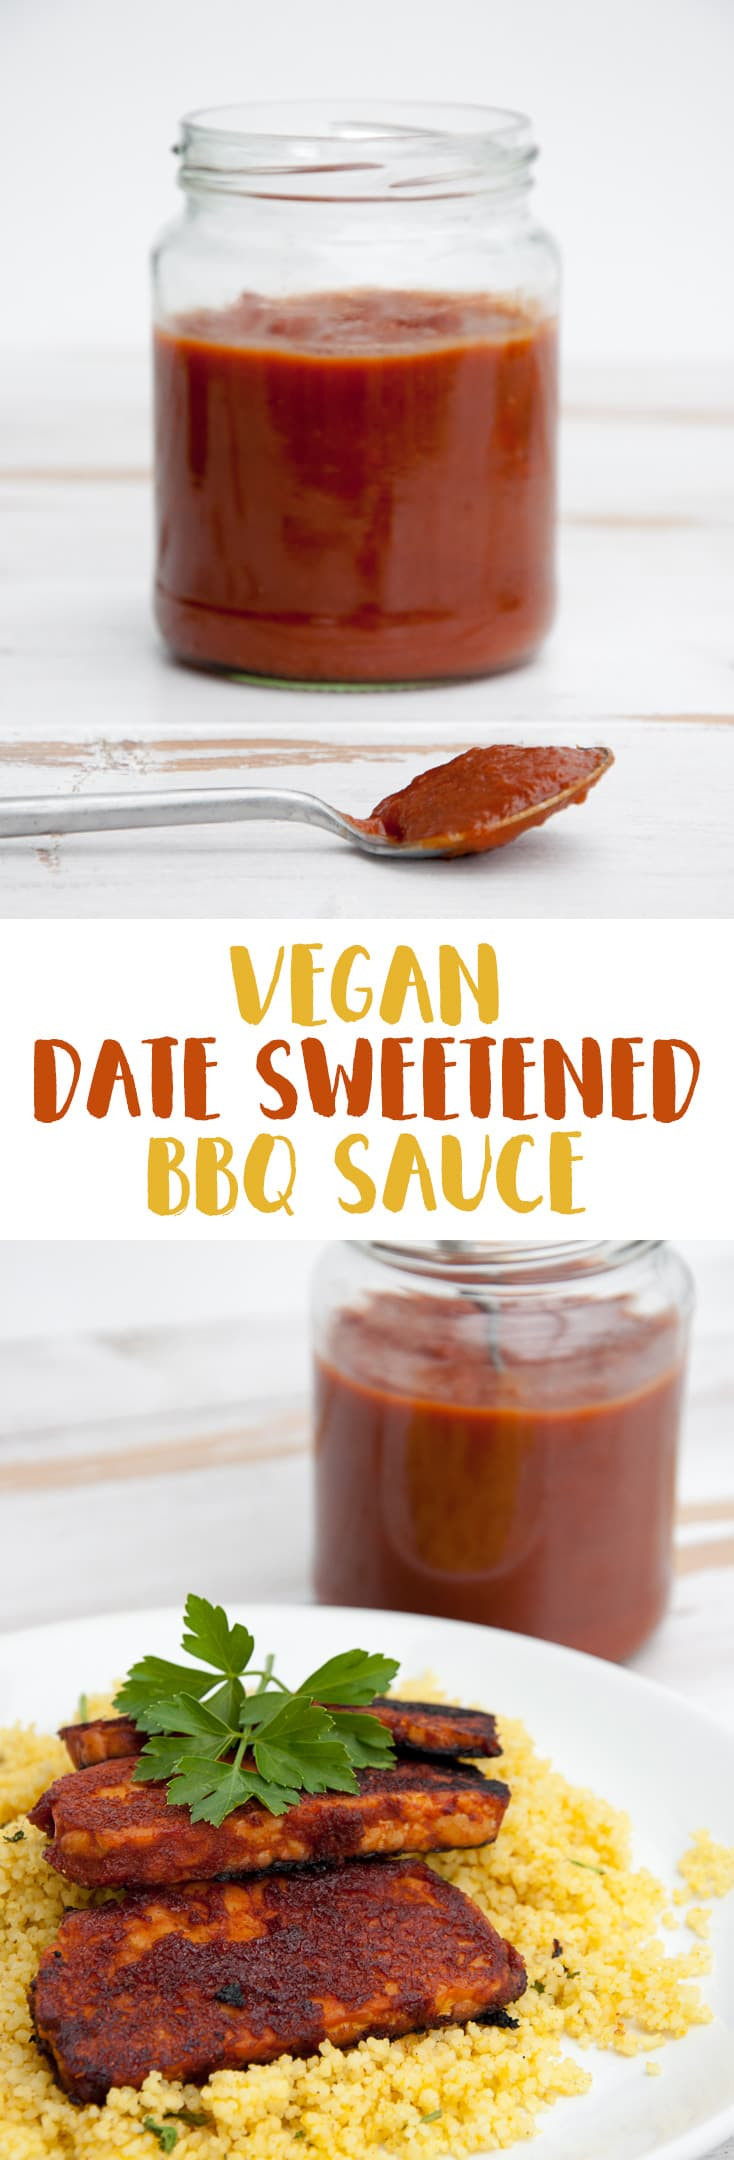 Vegan Bbq Sauce
 Vegan Date Sweetened BBQ Sauce Recipe